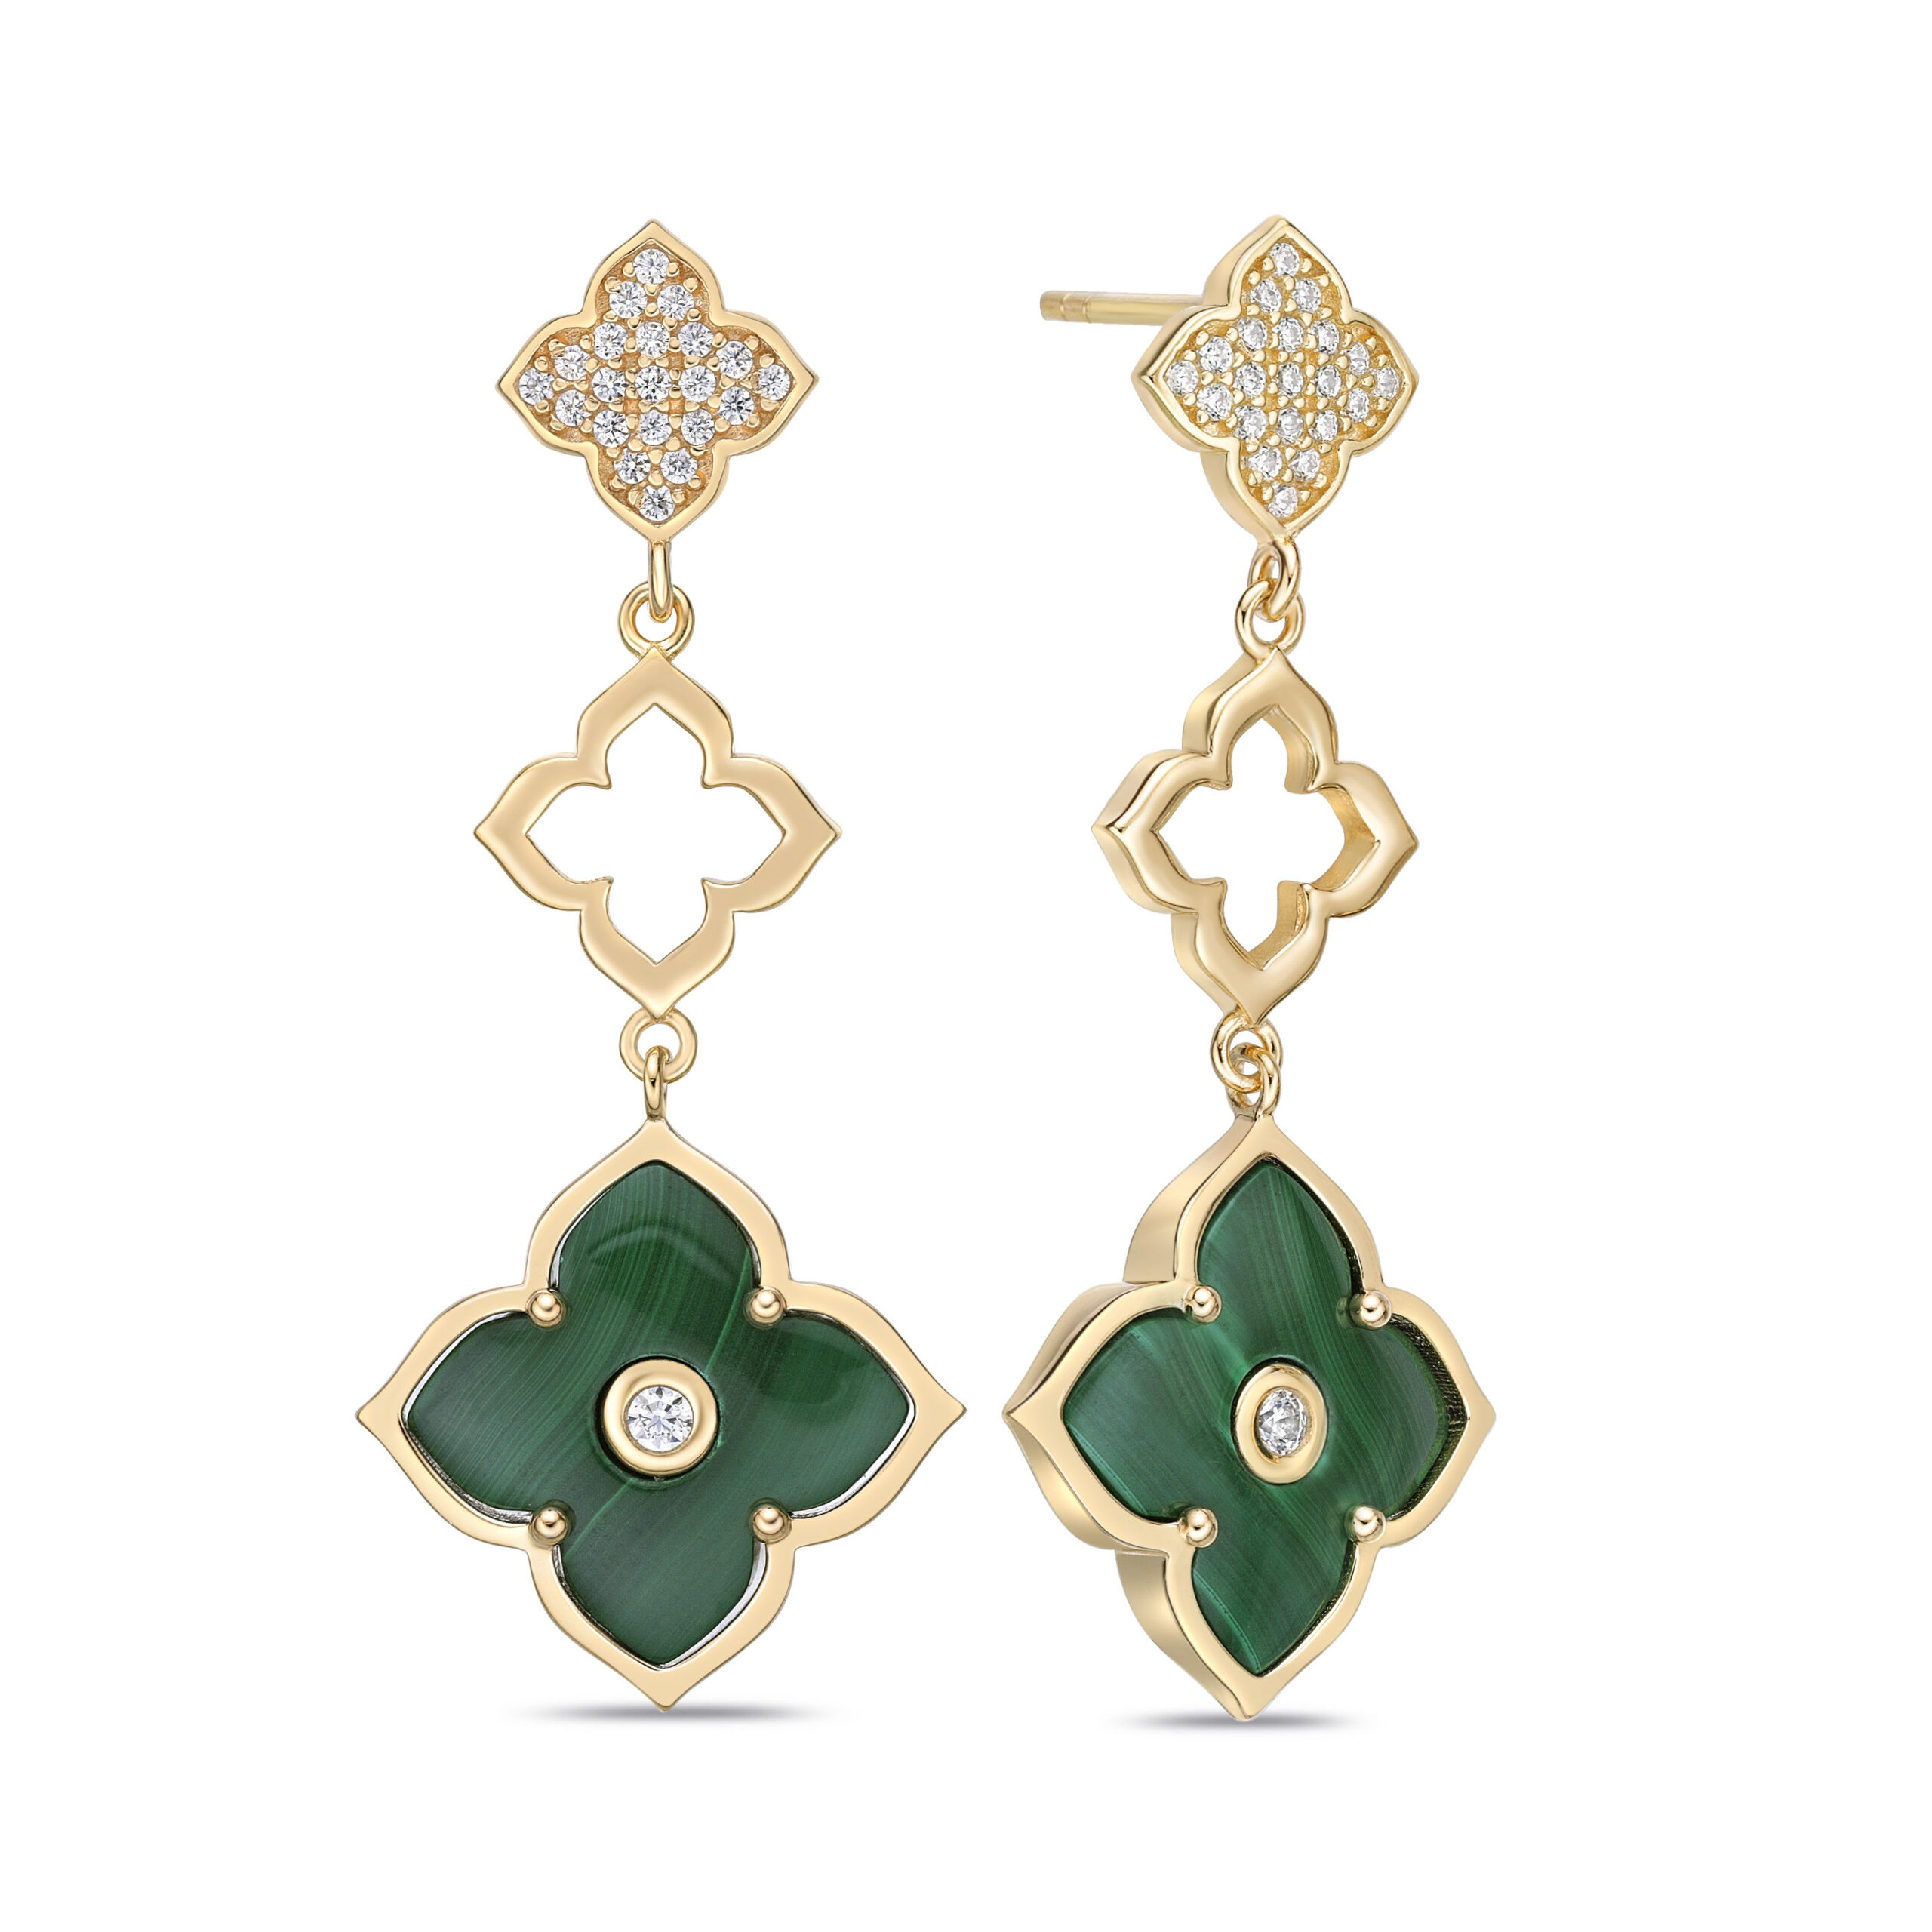 50779-earrings-fashion-jewelry-no-metal-50779-1-1.jpg